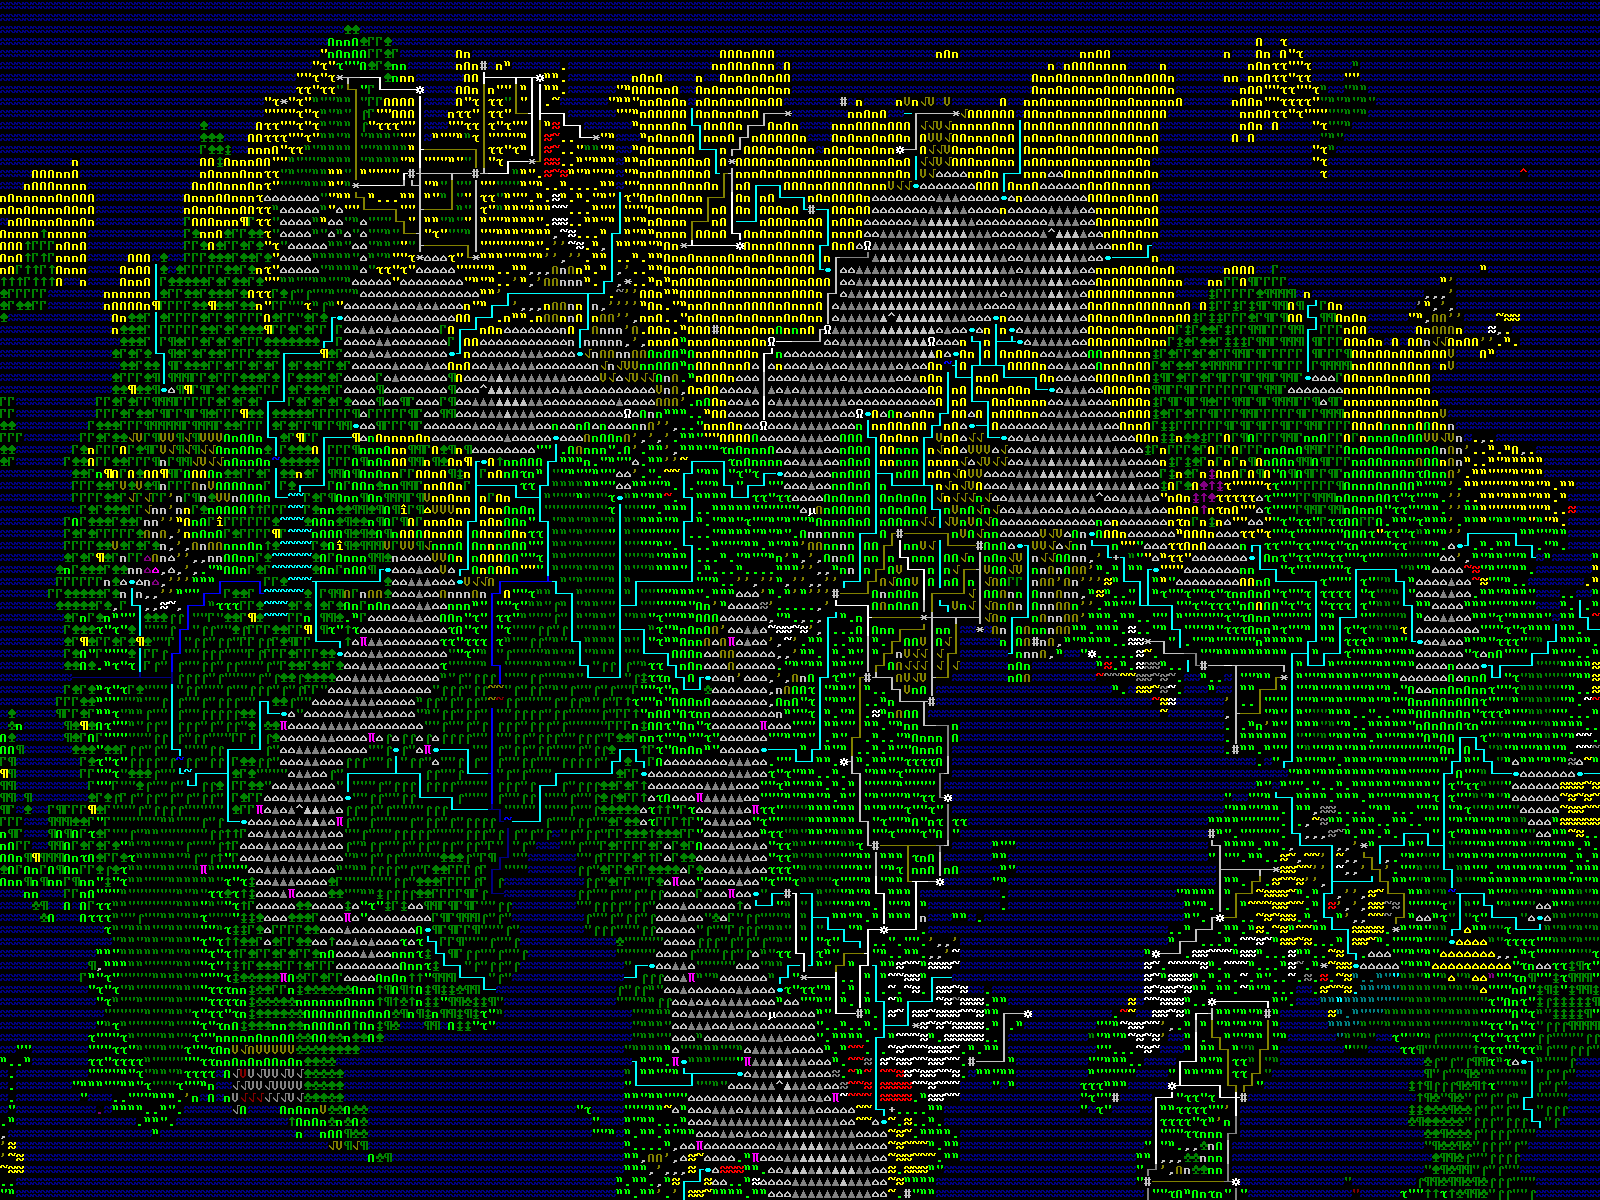 dwarf fortress advanced world gen parameters